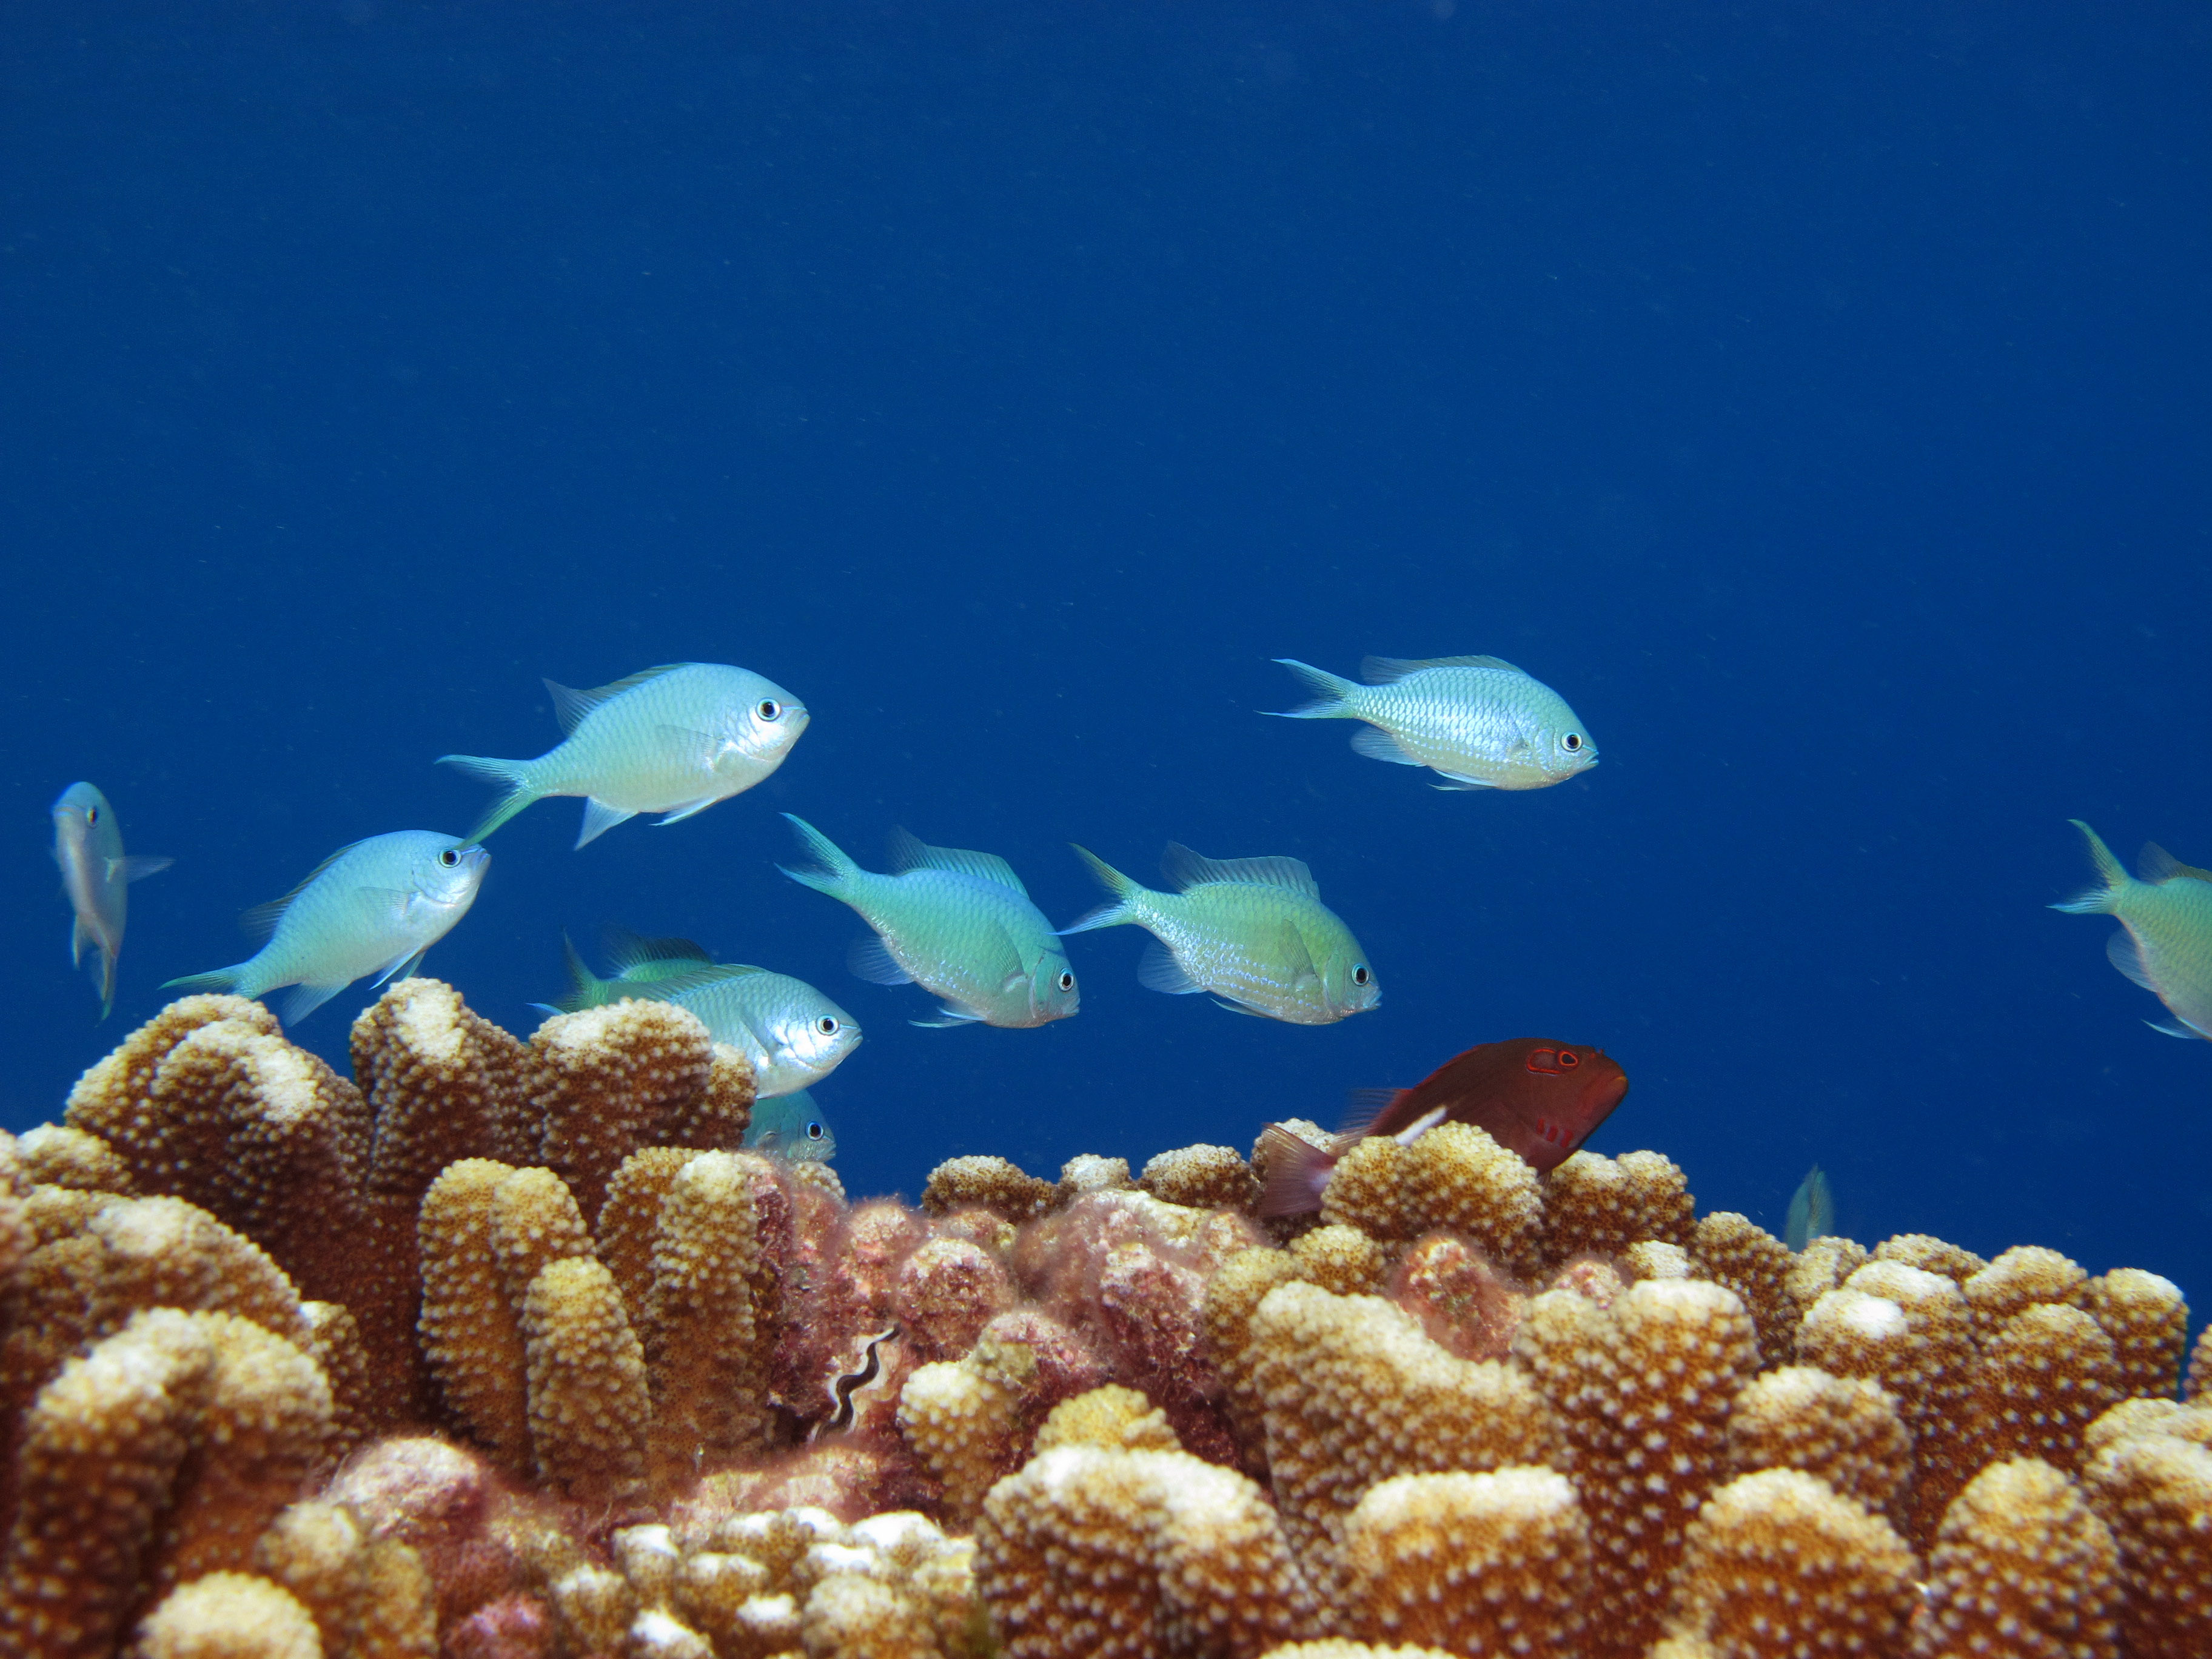 Reef Life Survey image